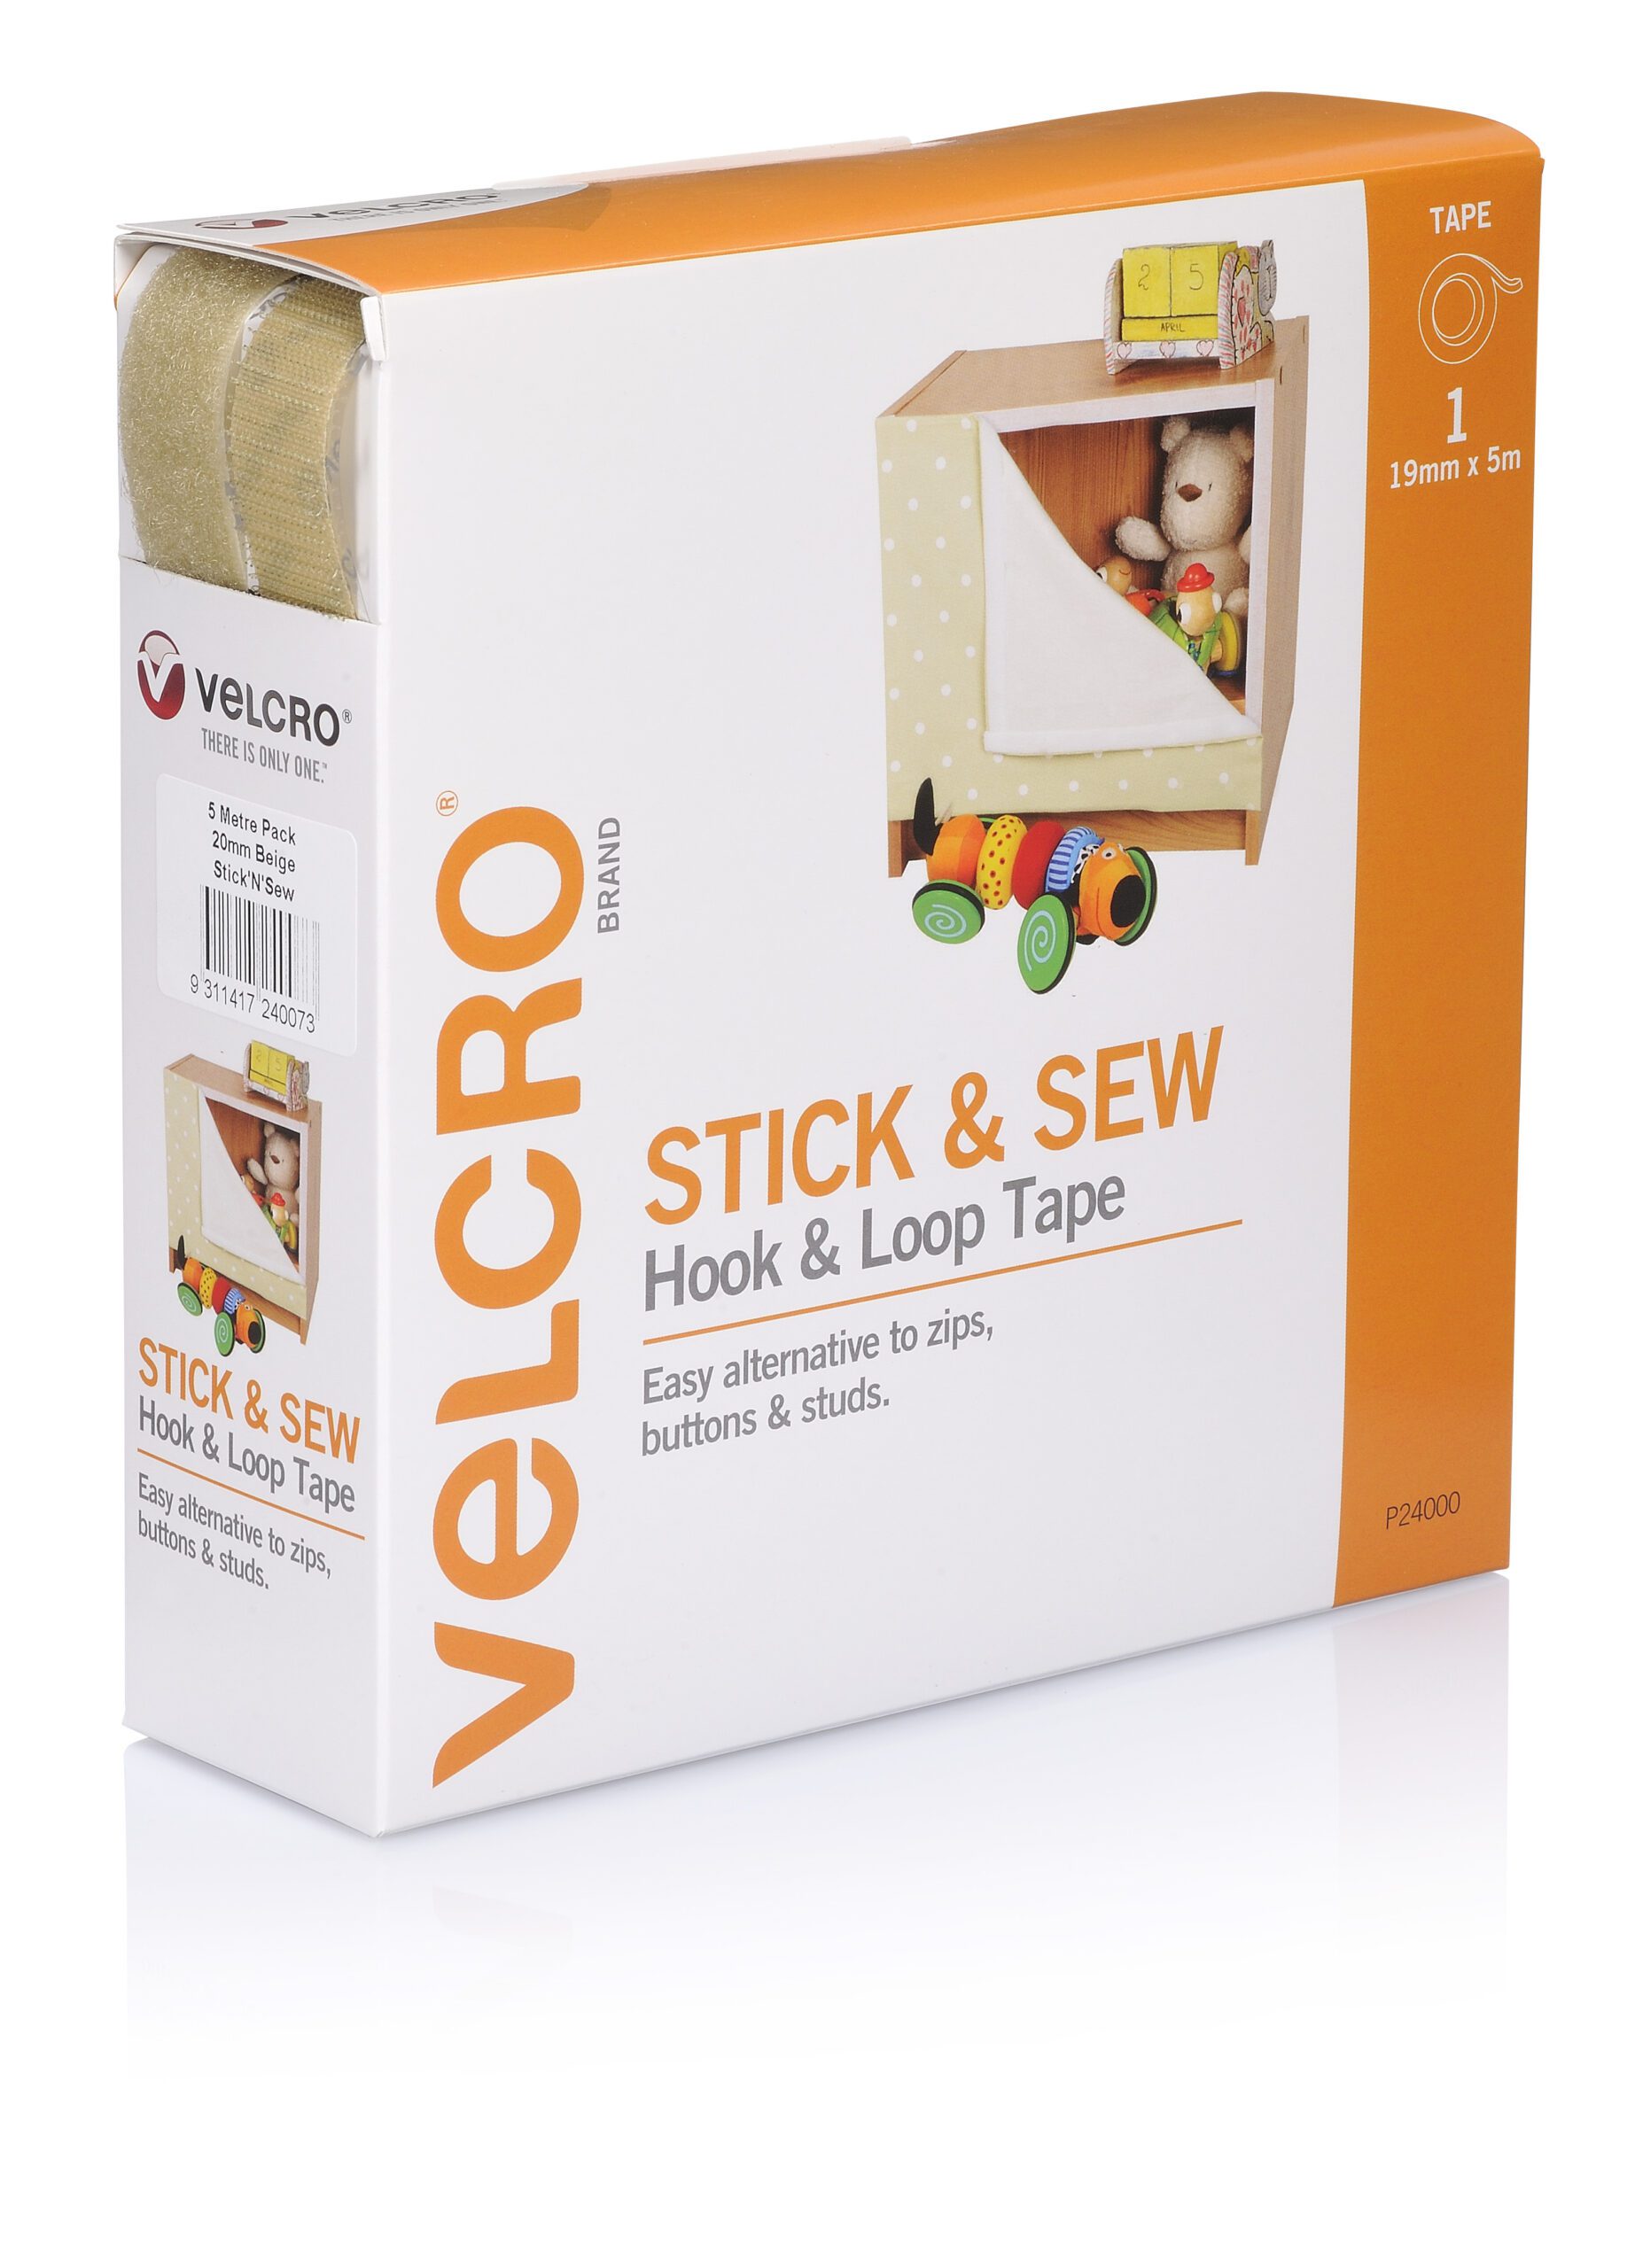 VELCRO® Brand Stick On Tape 20mm x 2.5m Black